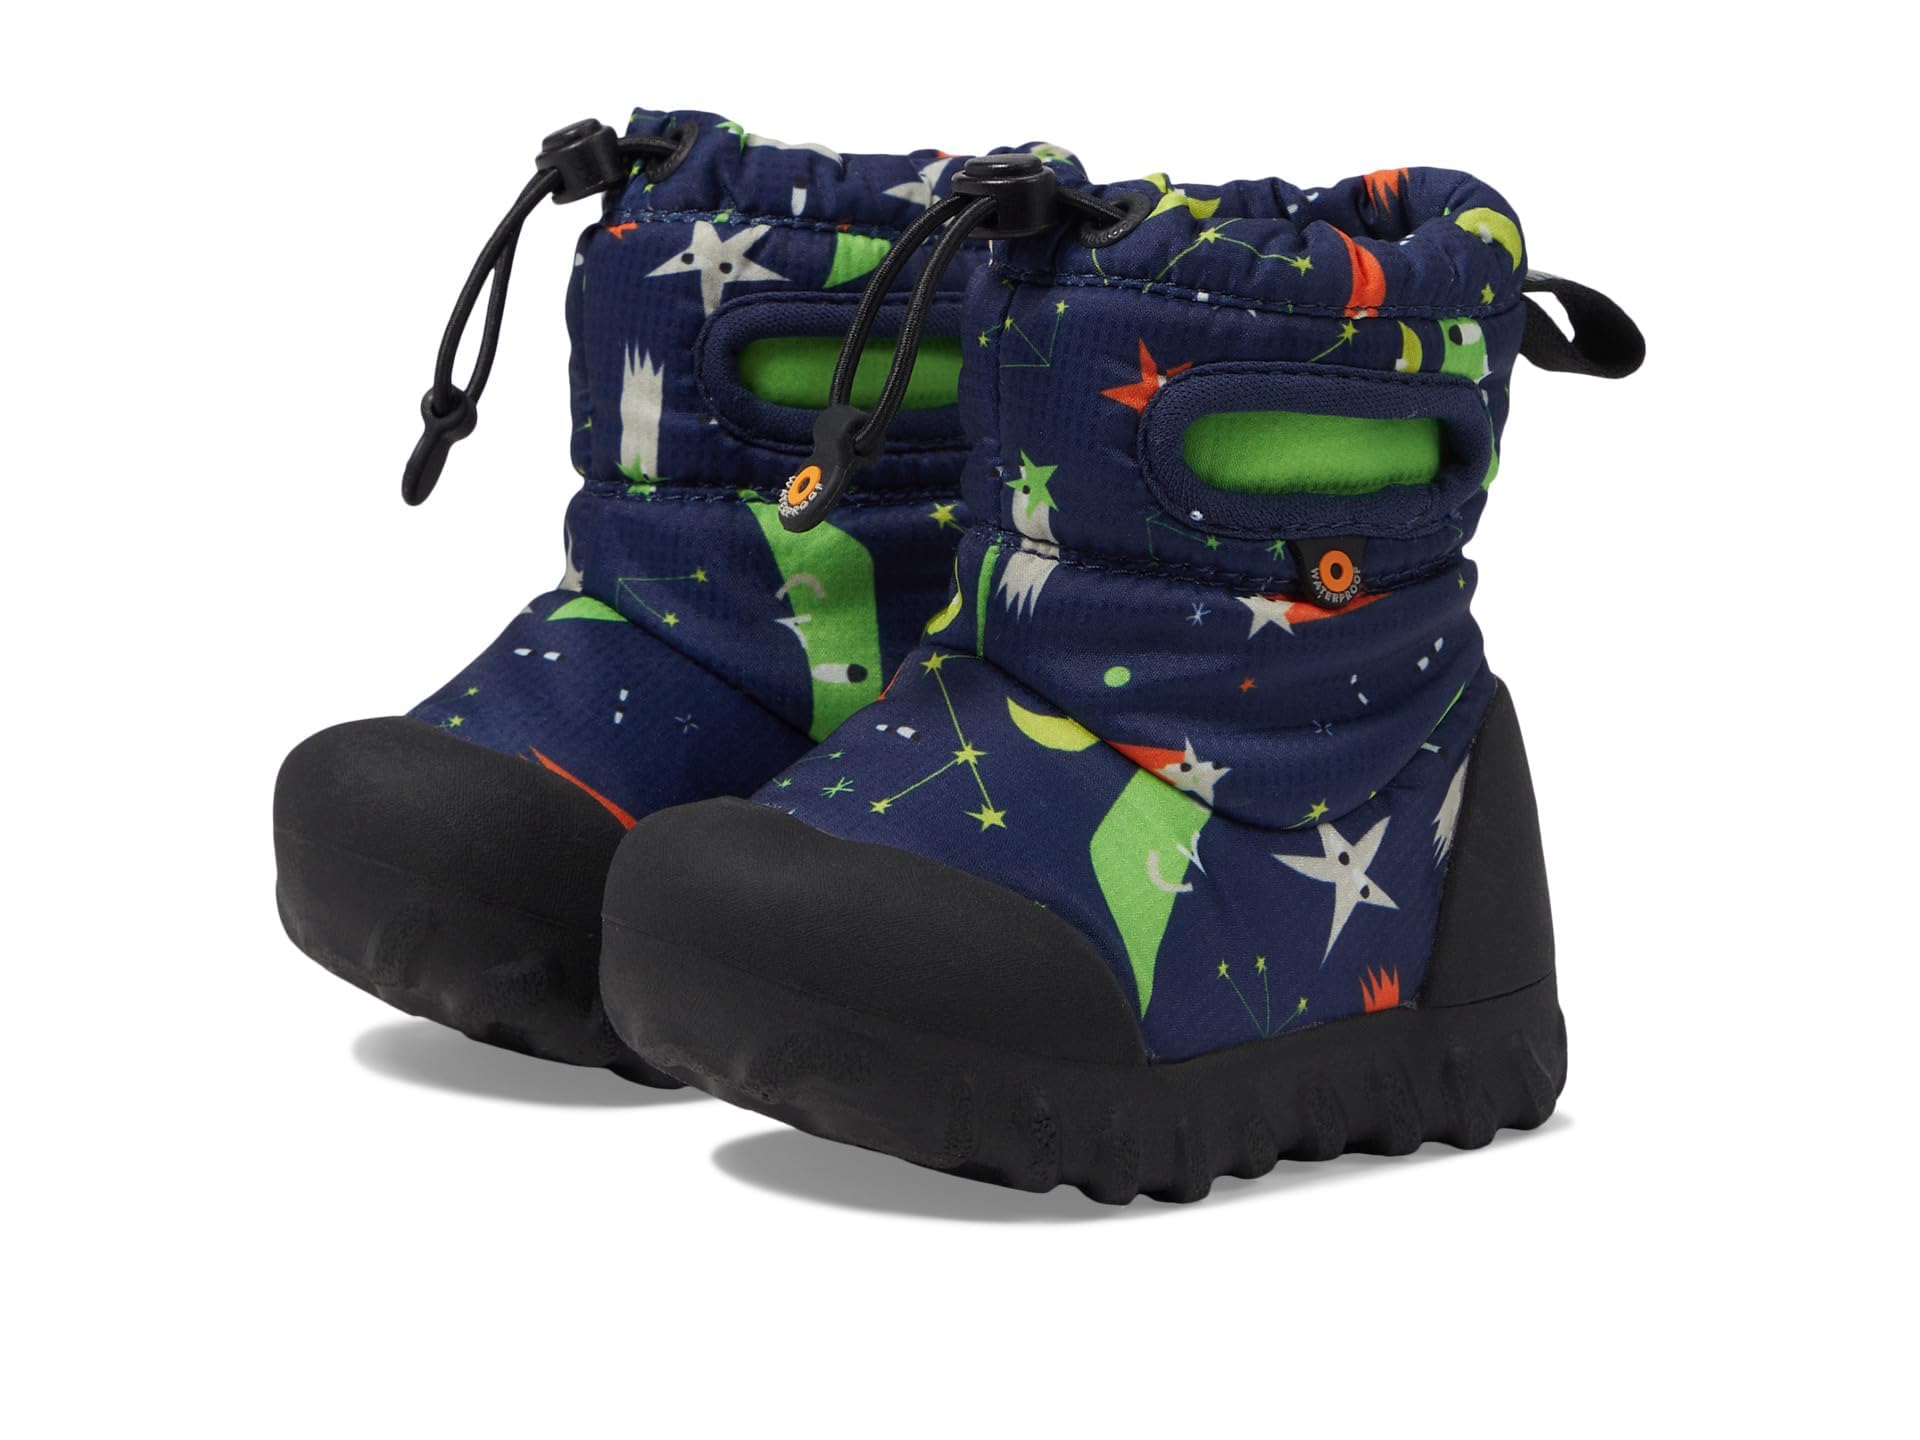 BOGS Unisex-Child B-moc Snow Boot